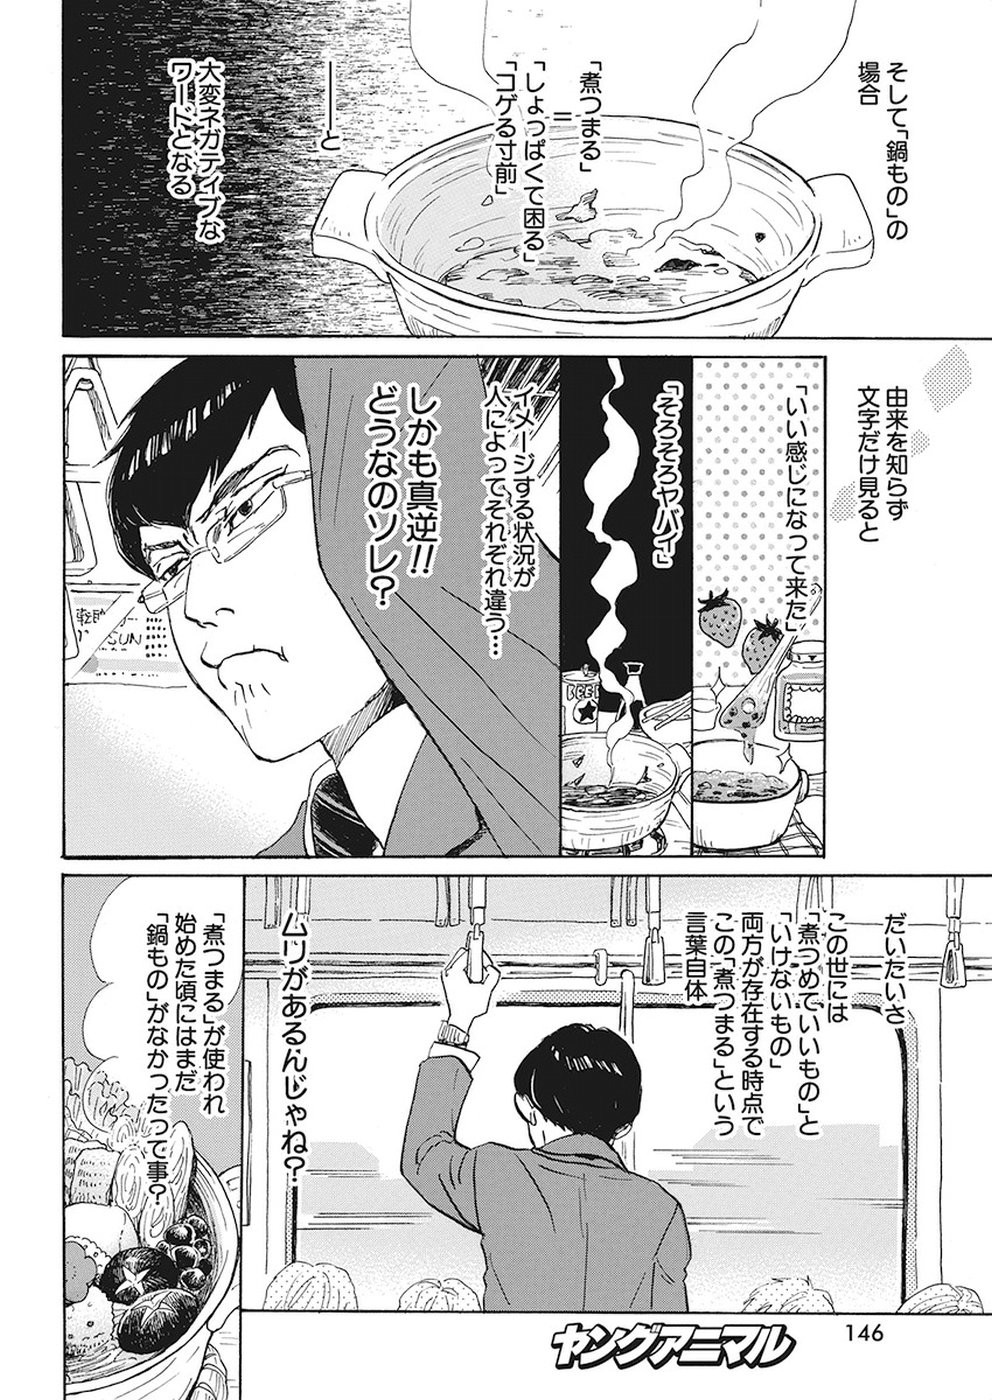 3 Gatsu no Lion - Chapter 156 - Page 4